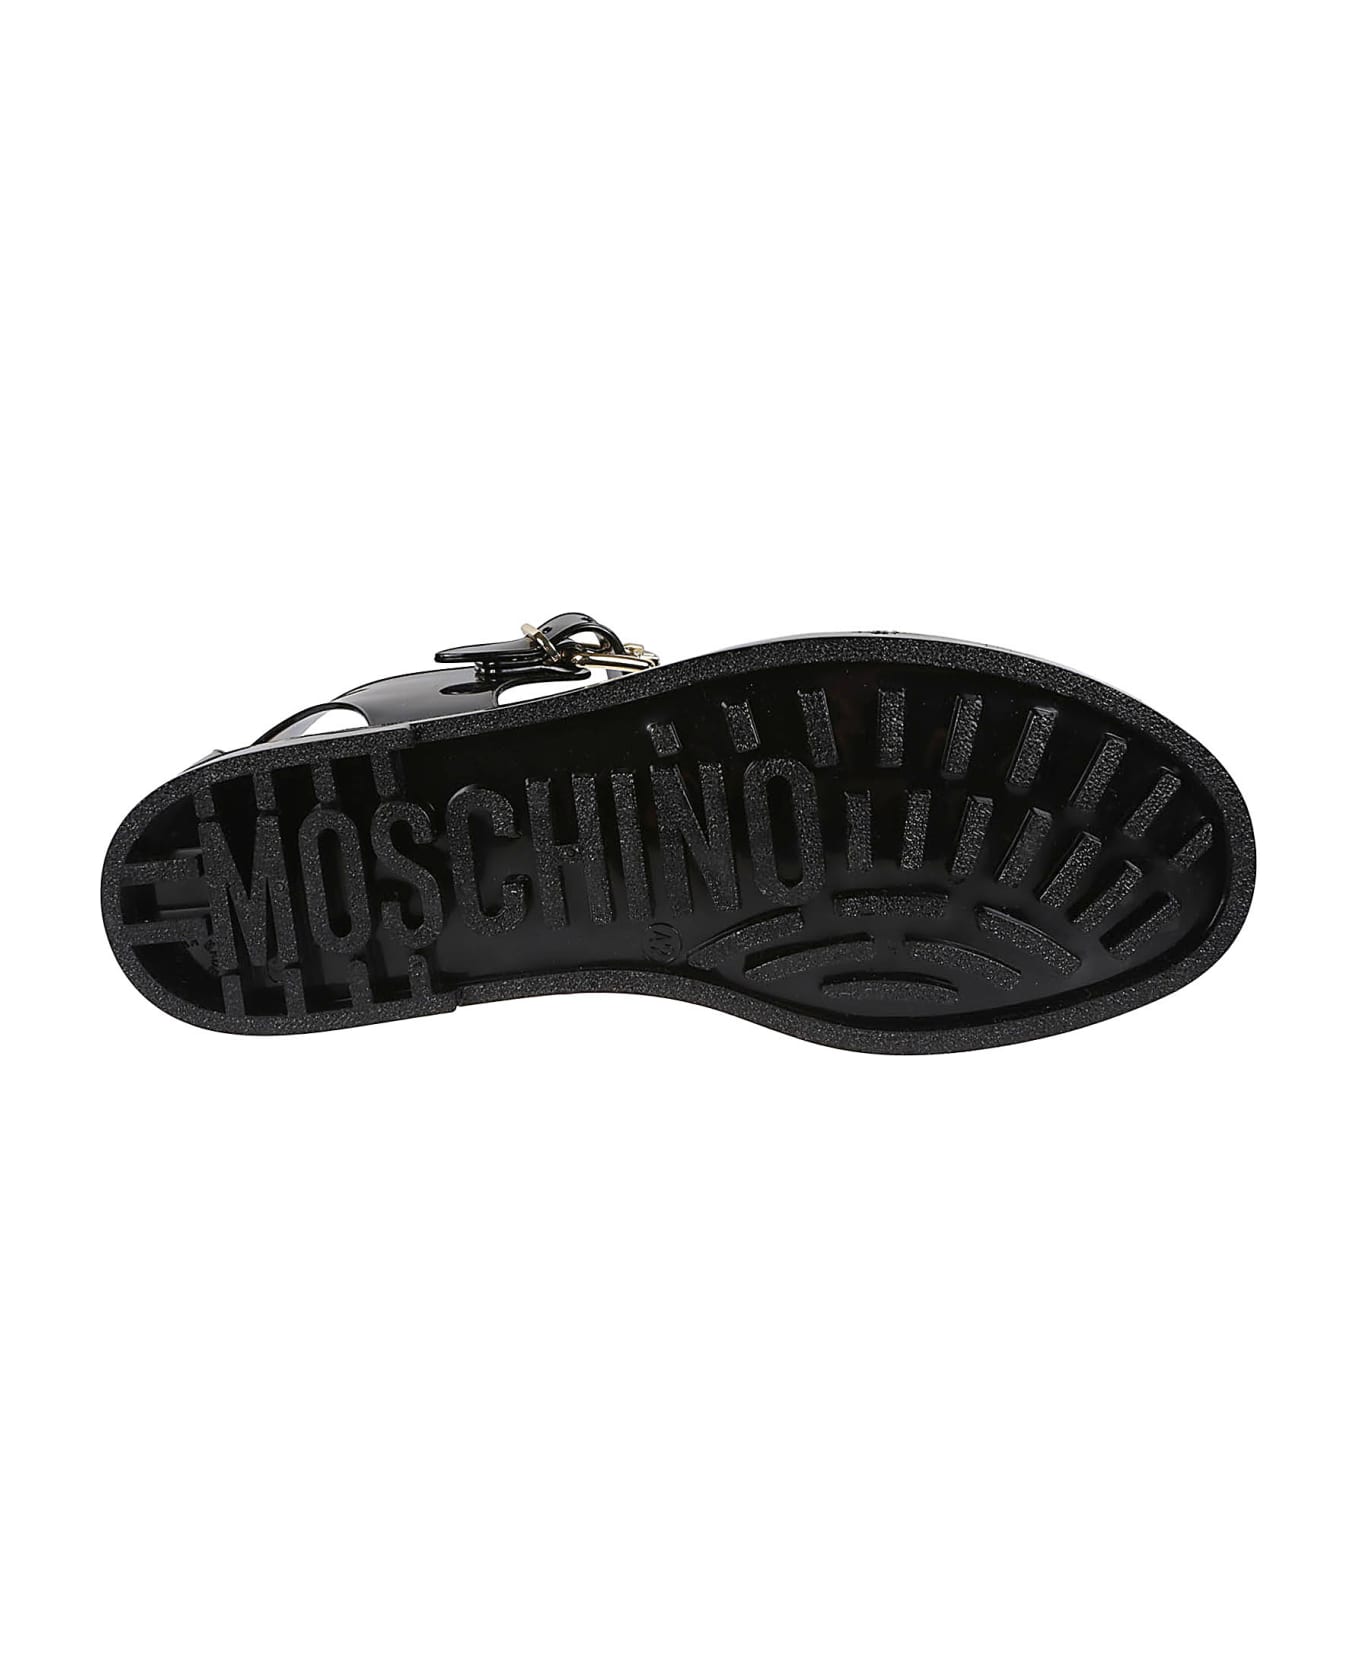 Moschino Jelly15 Sandals - Nero その他各種シューズ